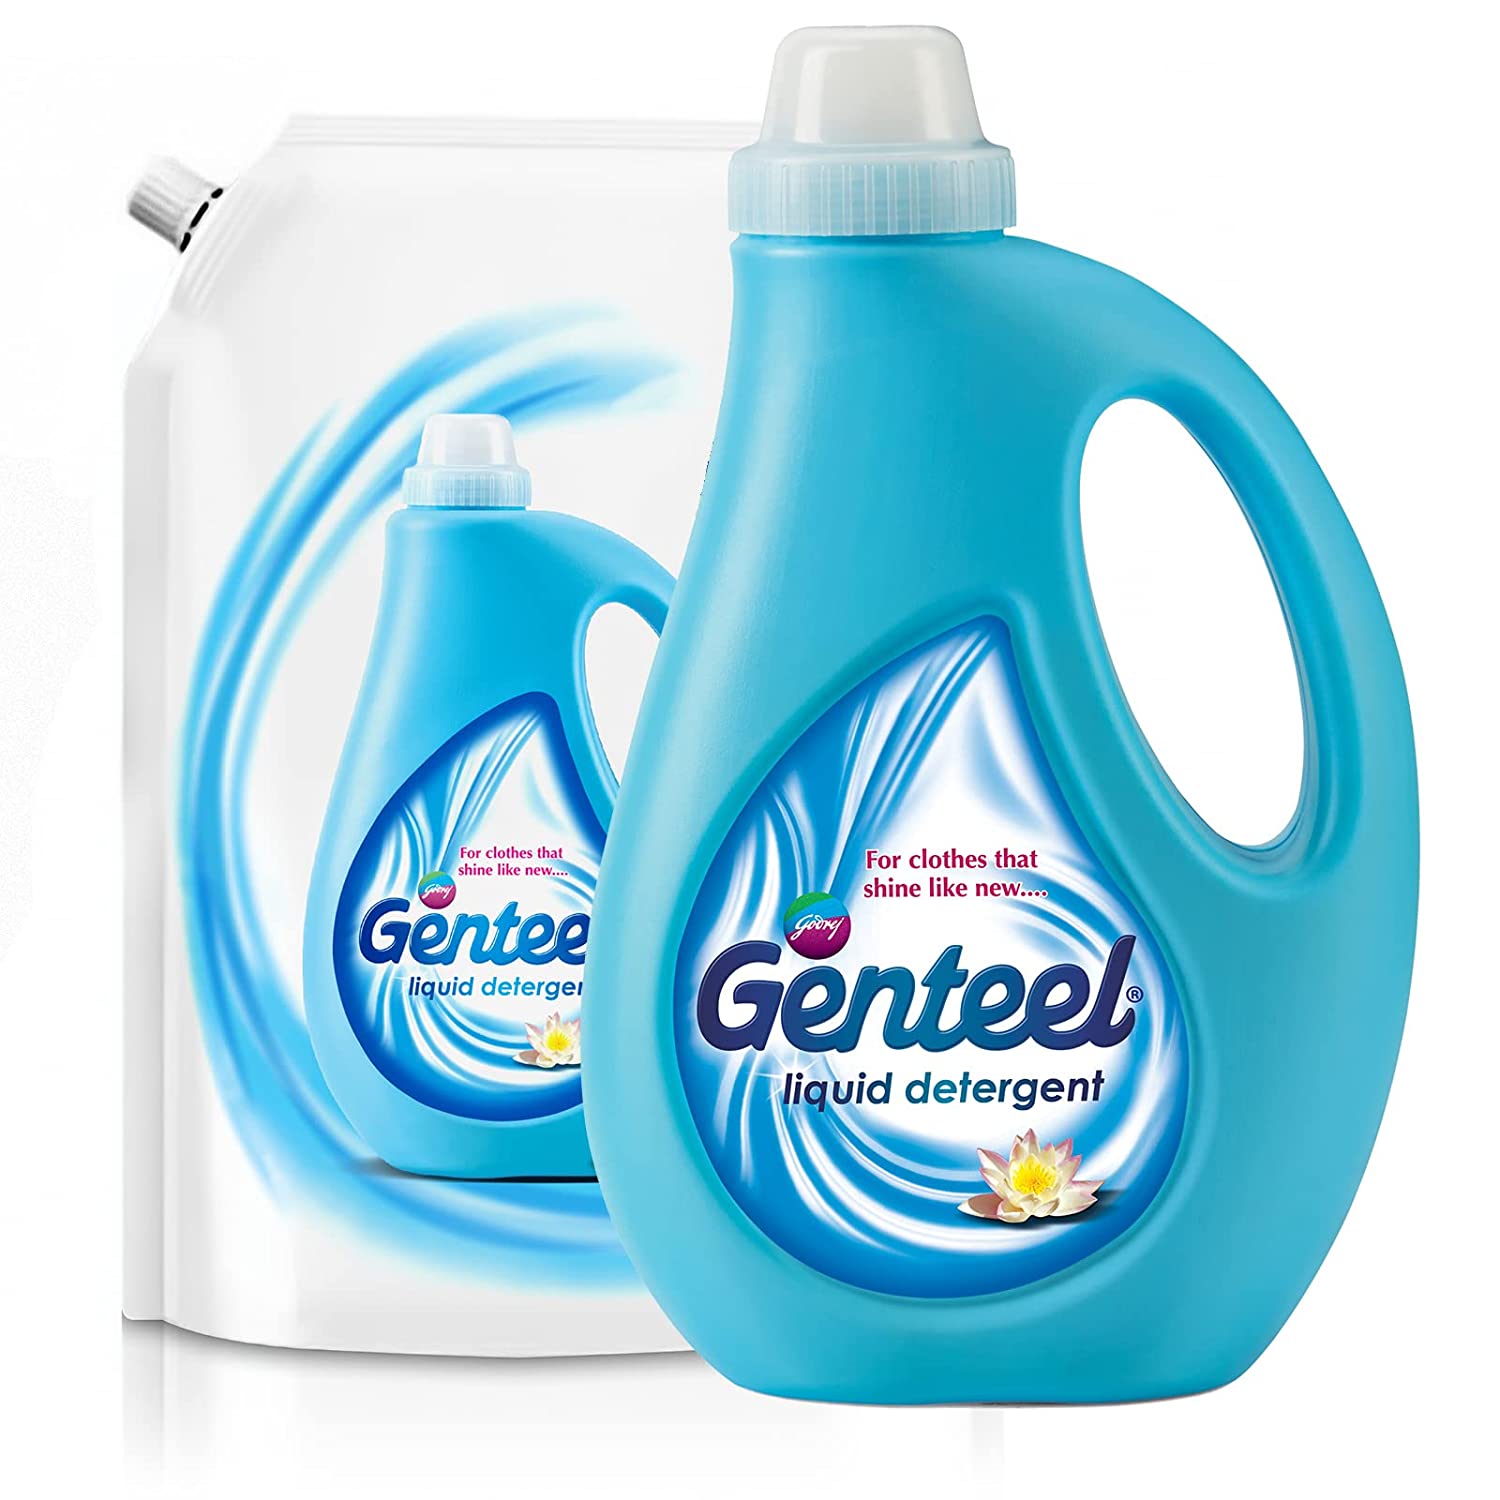 Genteel Liquid Detergent - Strong Formula, No Residue, Soft On